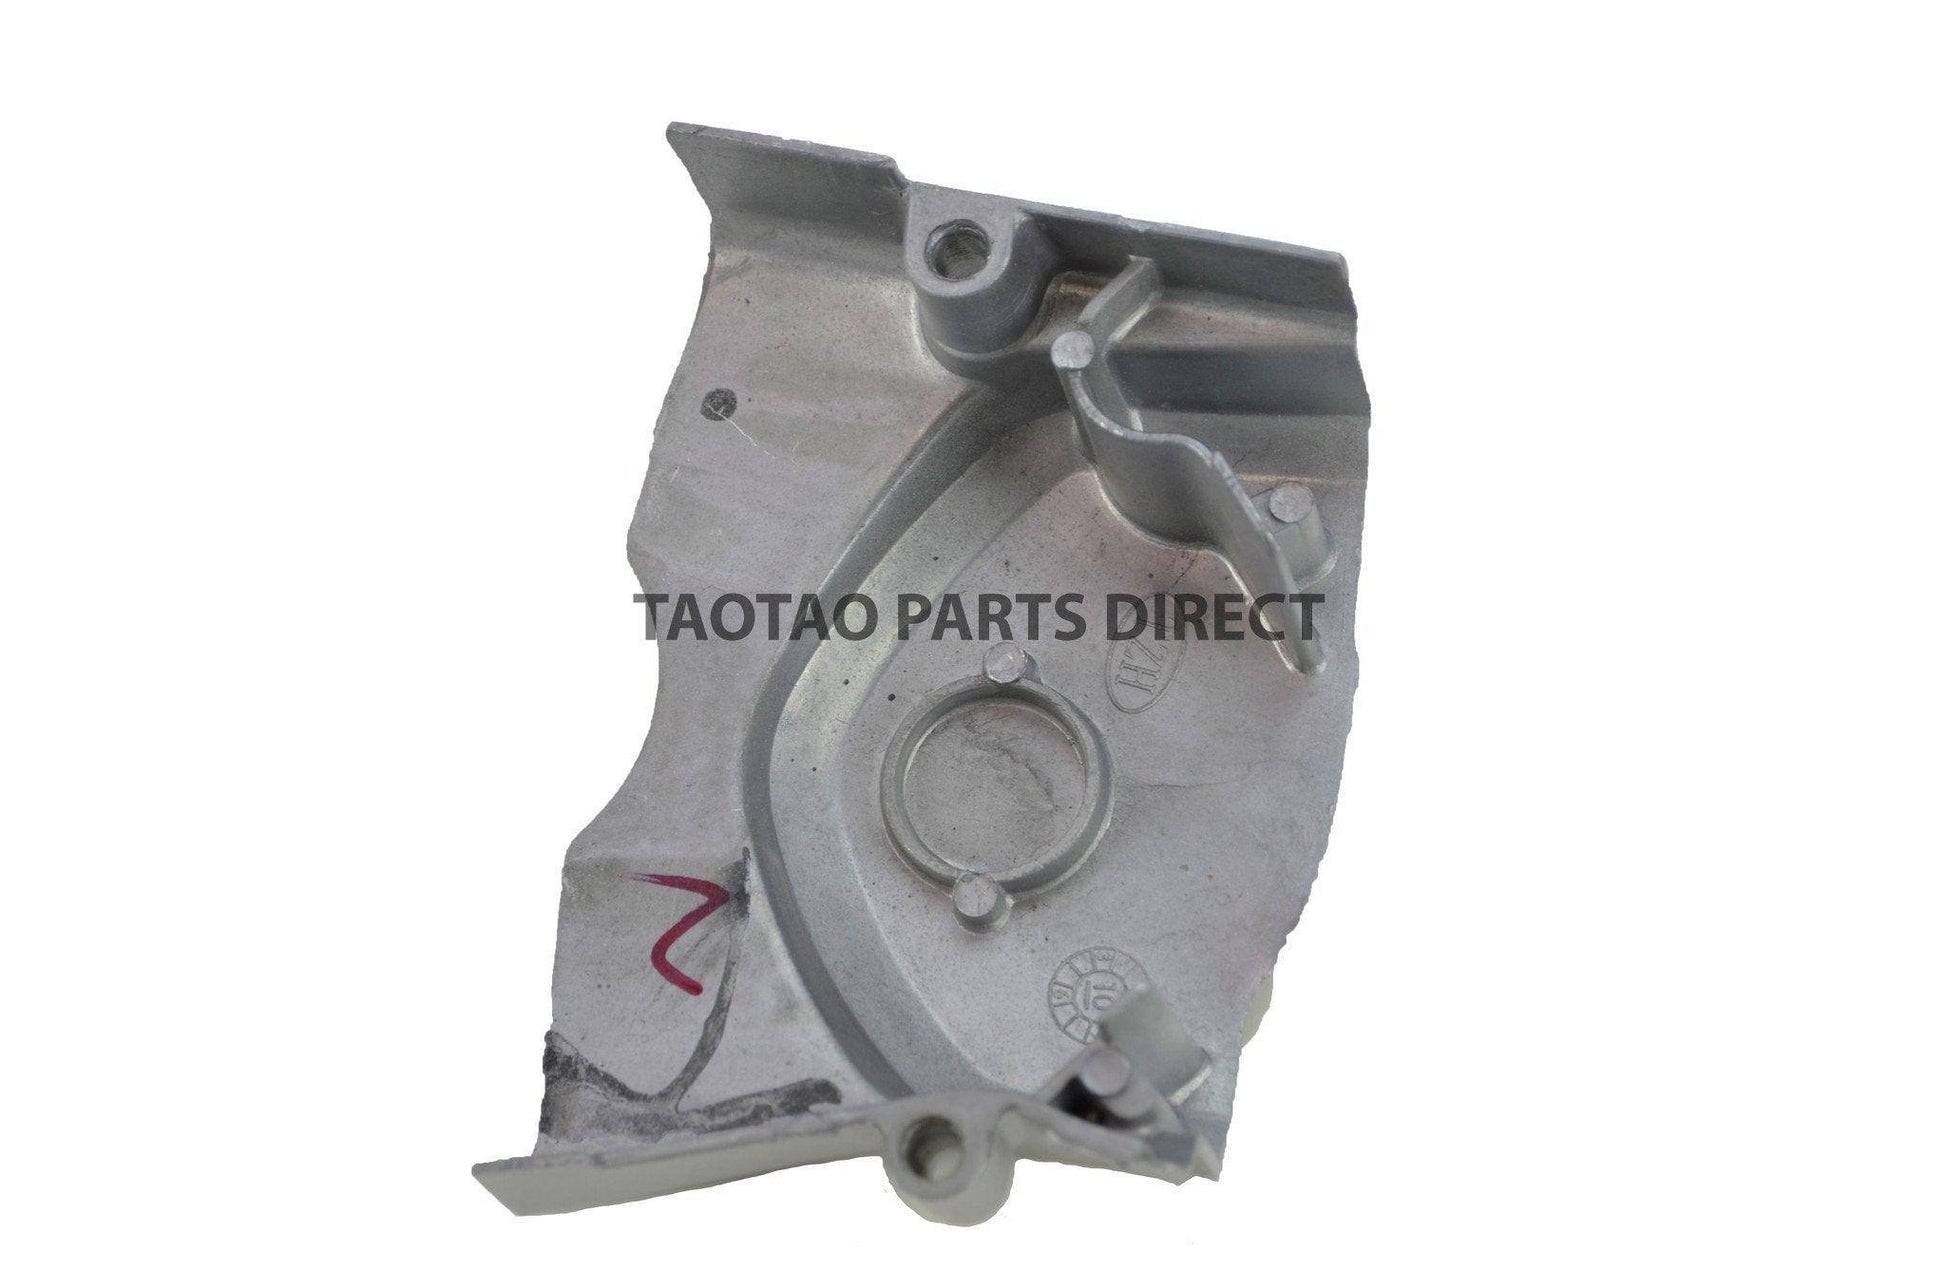 110cc/125cc Engine Chain Cover - TaoTao Parts Direct